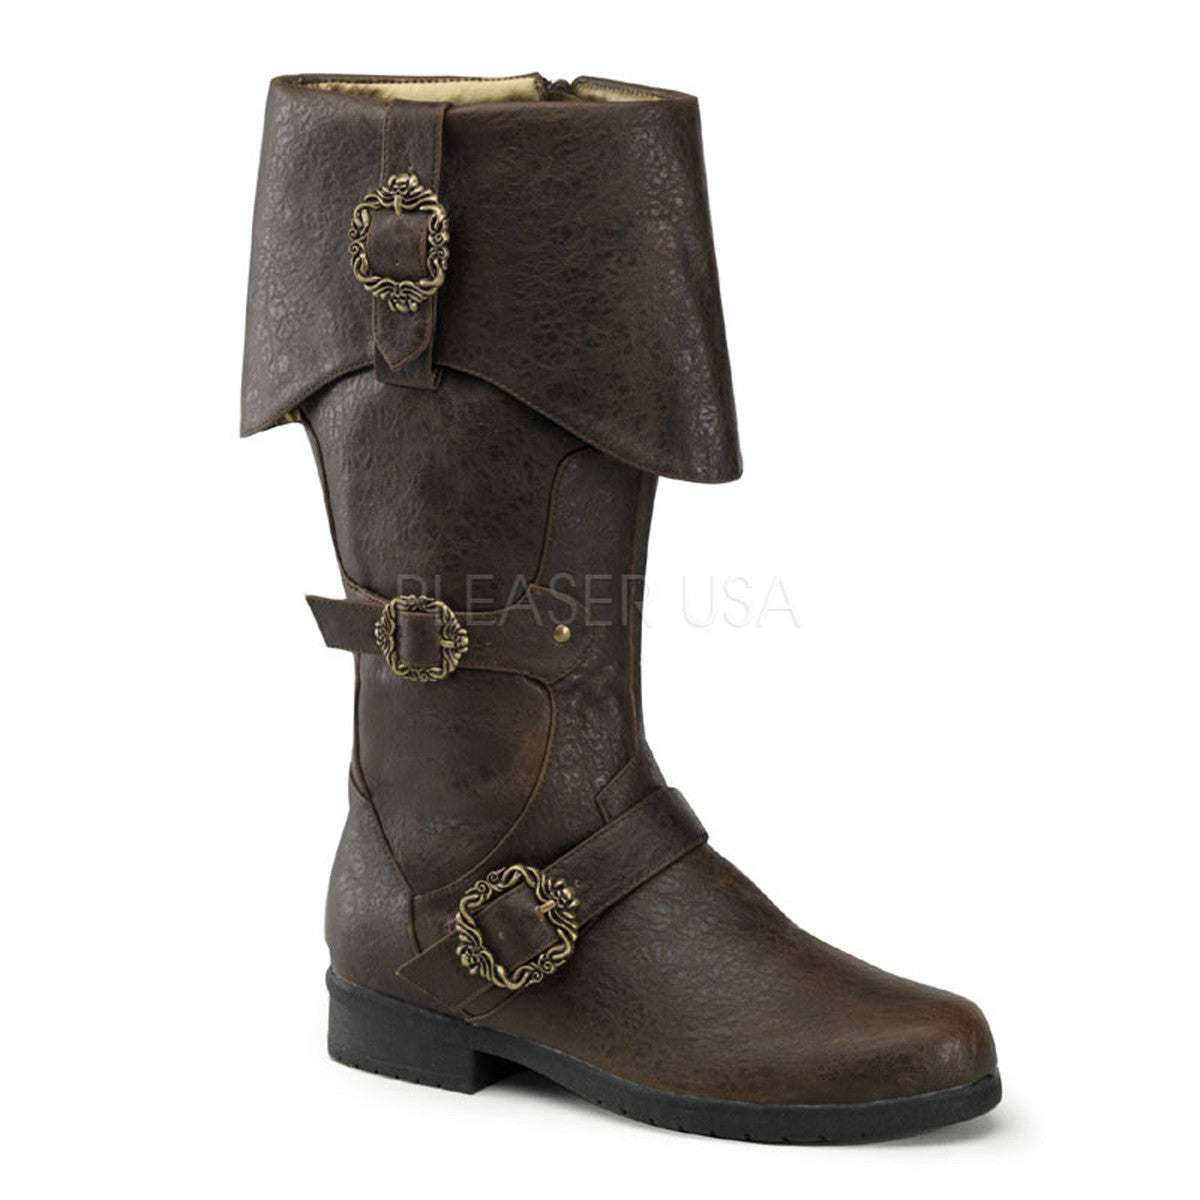 Funtasma,CARRIBEAN-299 Men's Brown Renaissance Boots - Shoecup.com